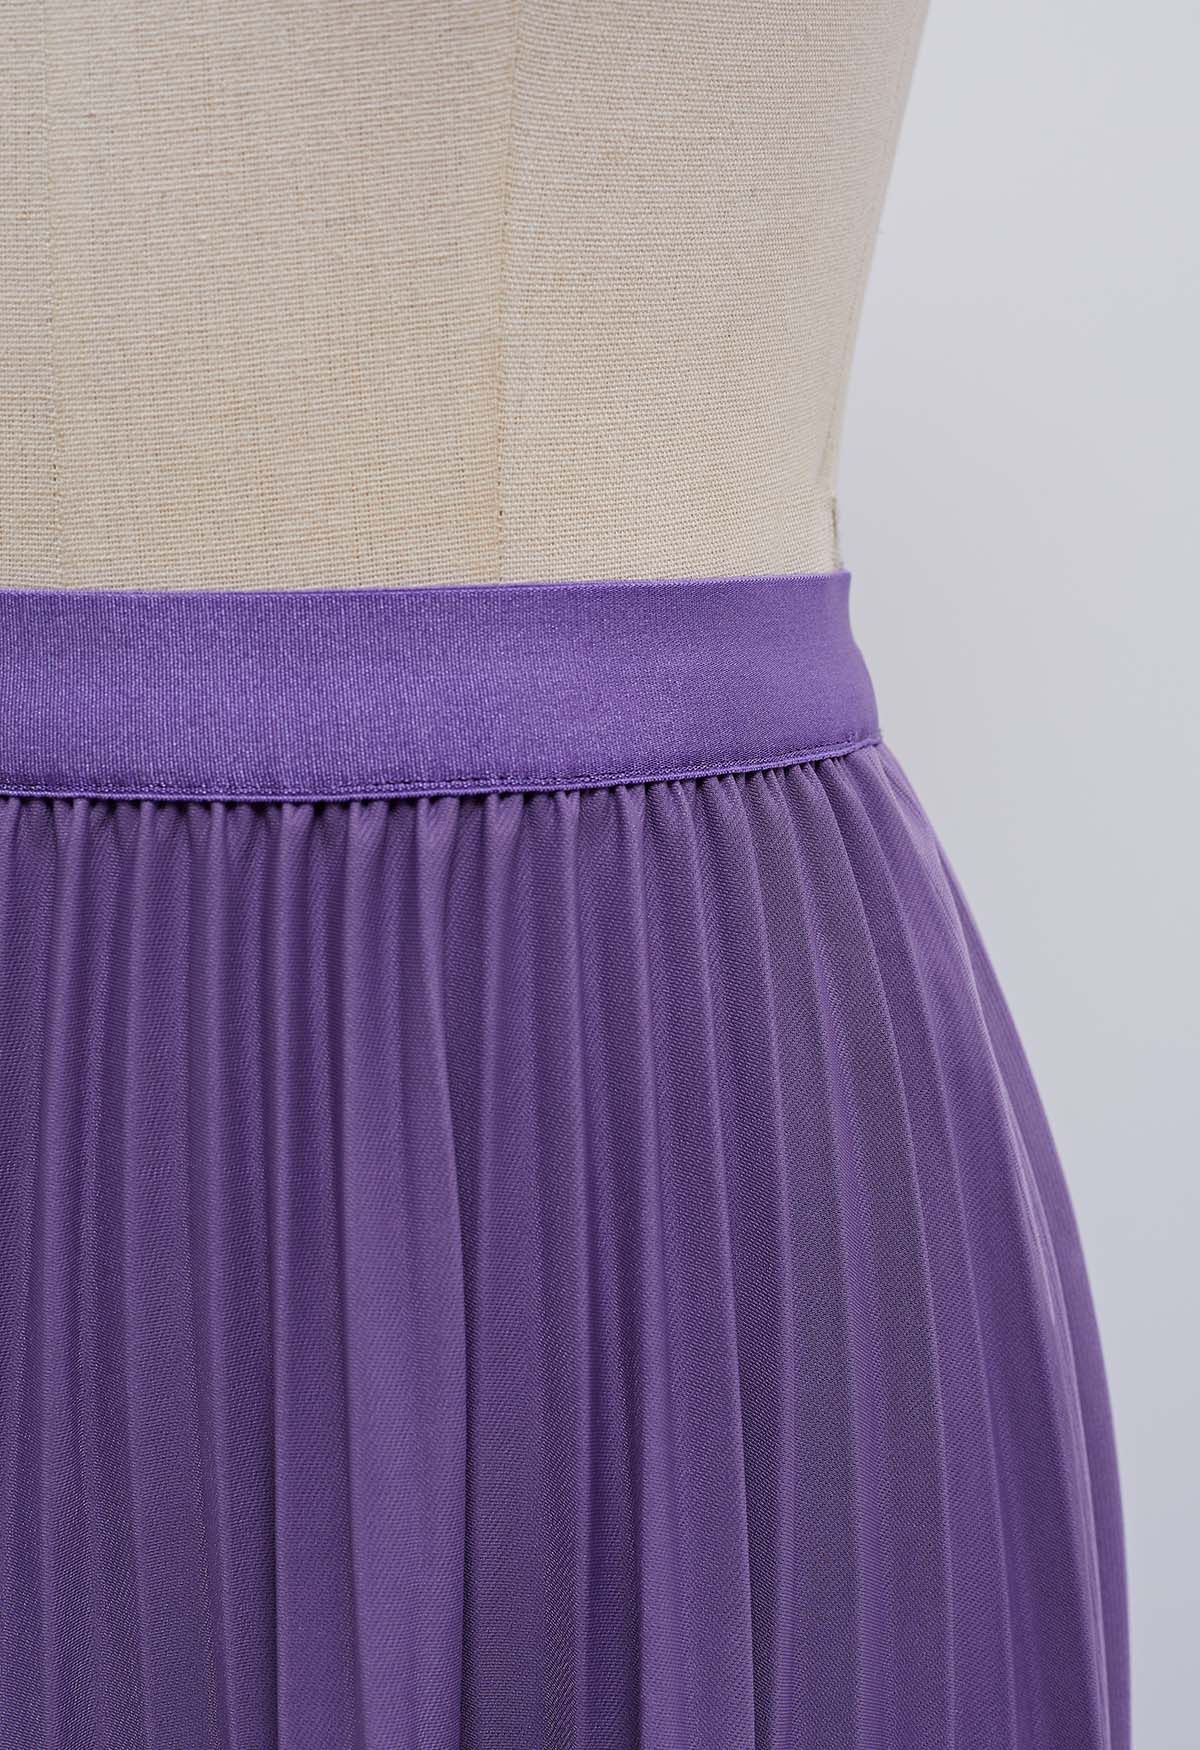 Simplicity Pleated Midi Skirt in Purple - Retro, Indie and Unique Fashion